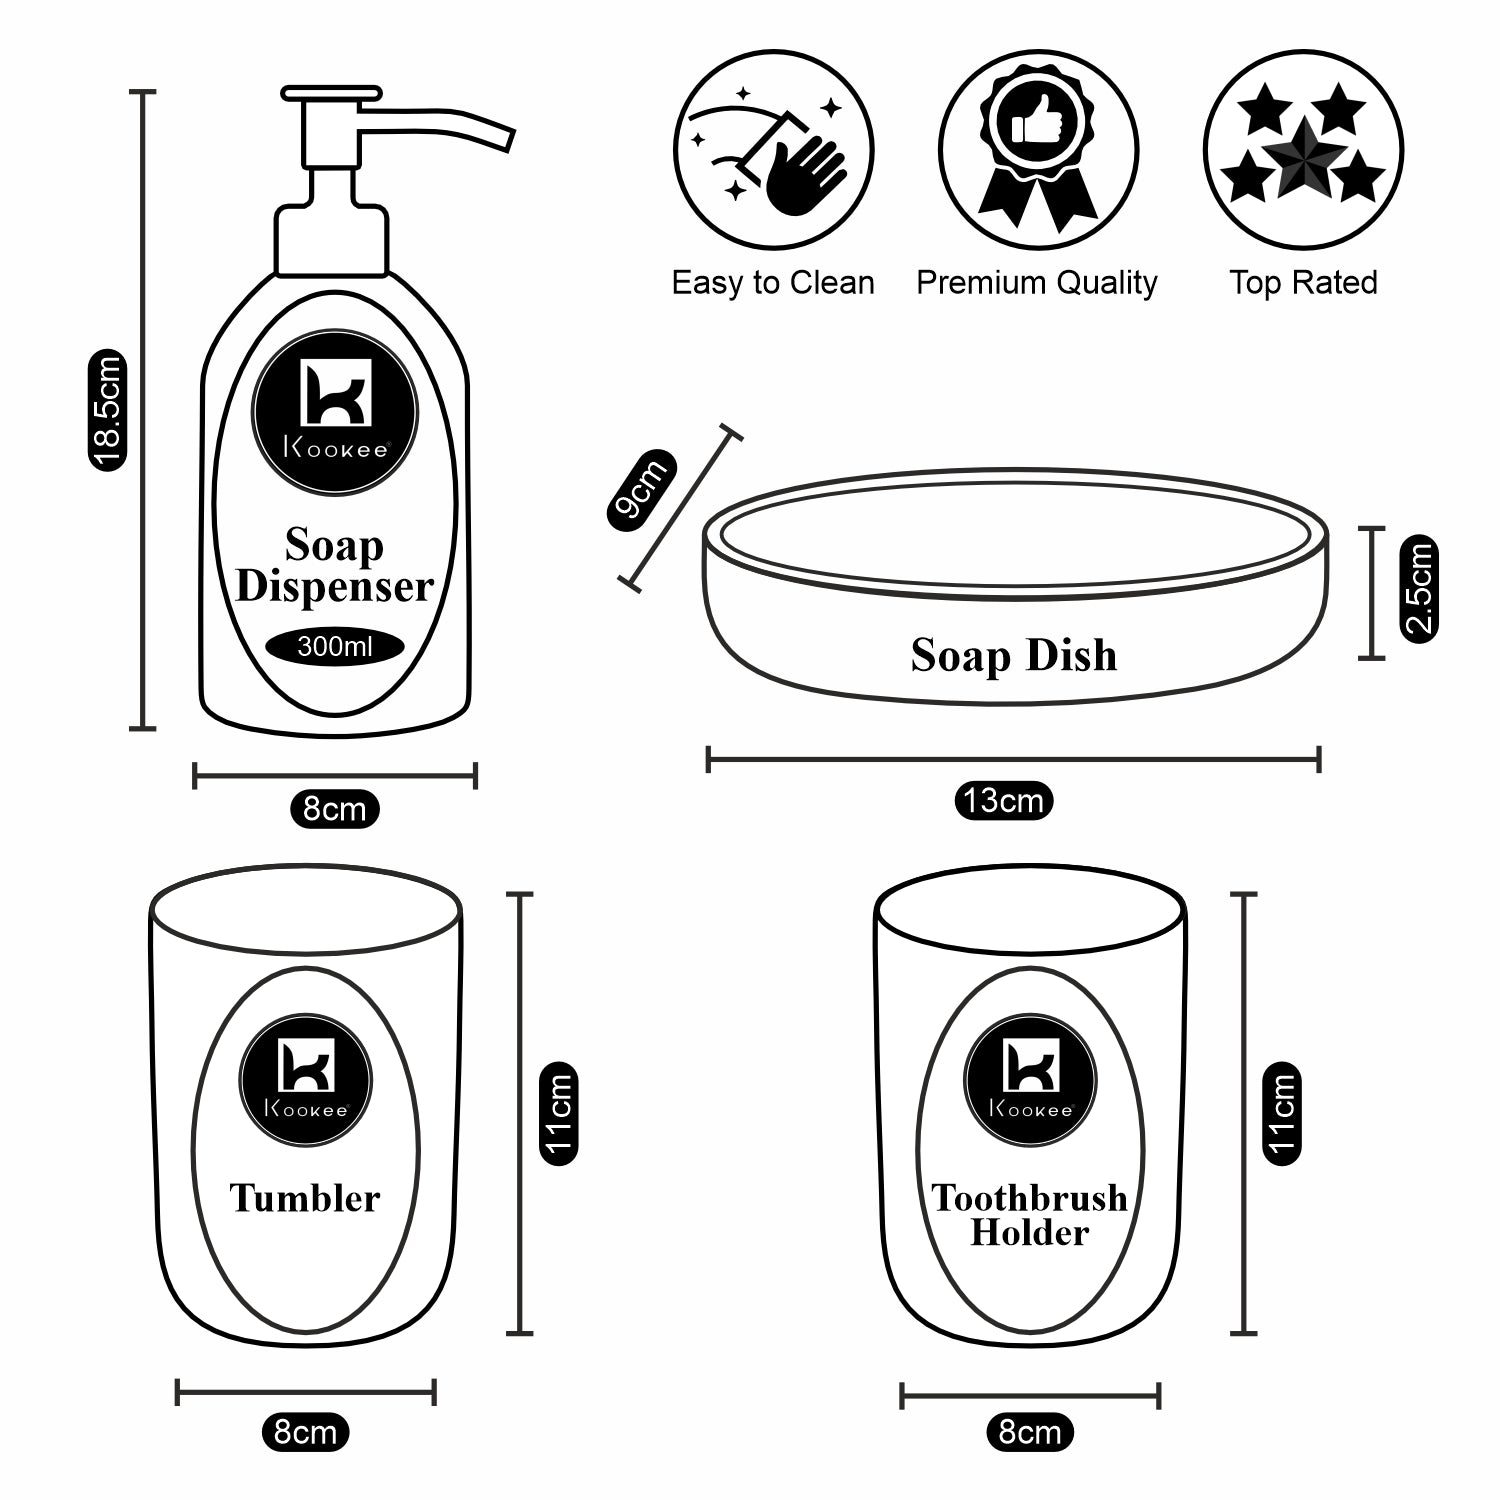 Ceramic Bathroom Accessories Set of 4 Bath Set with Soap Dispenser (8235)